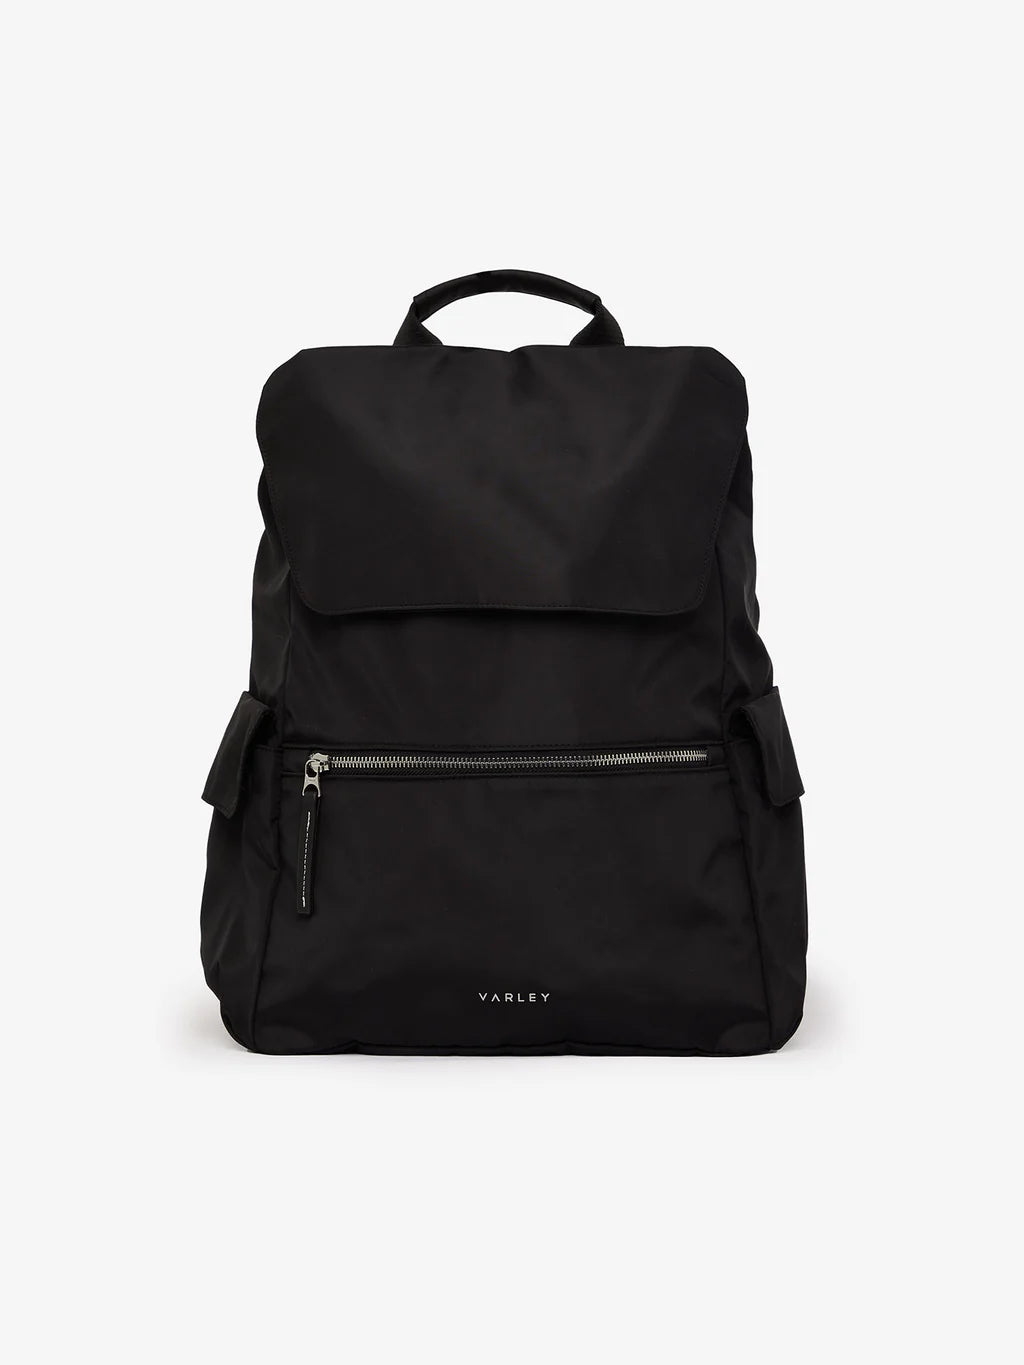 Corton Black Backpack